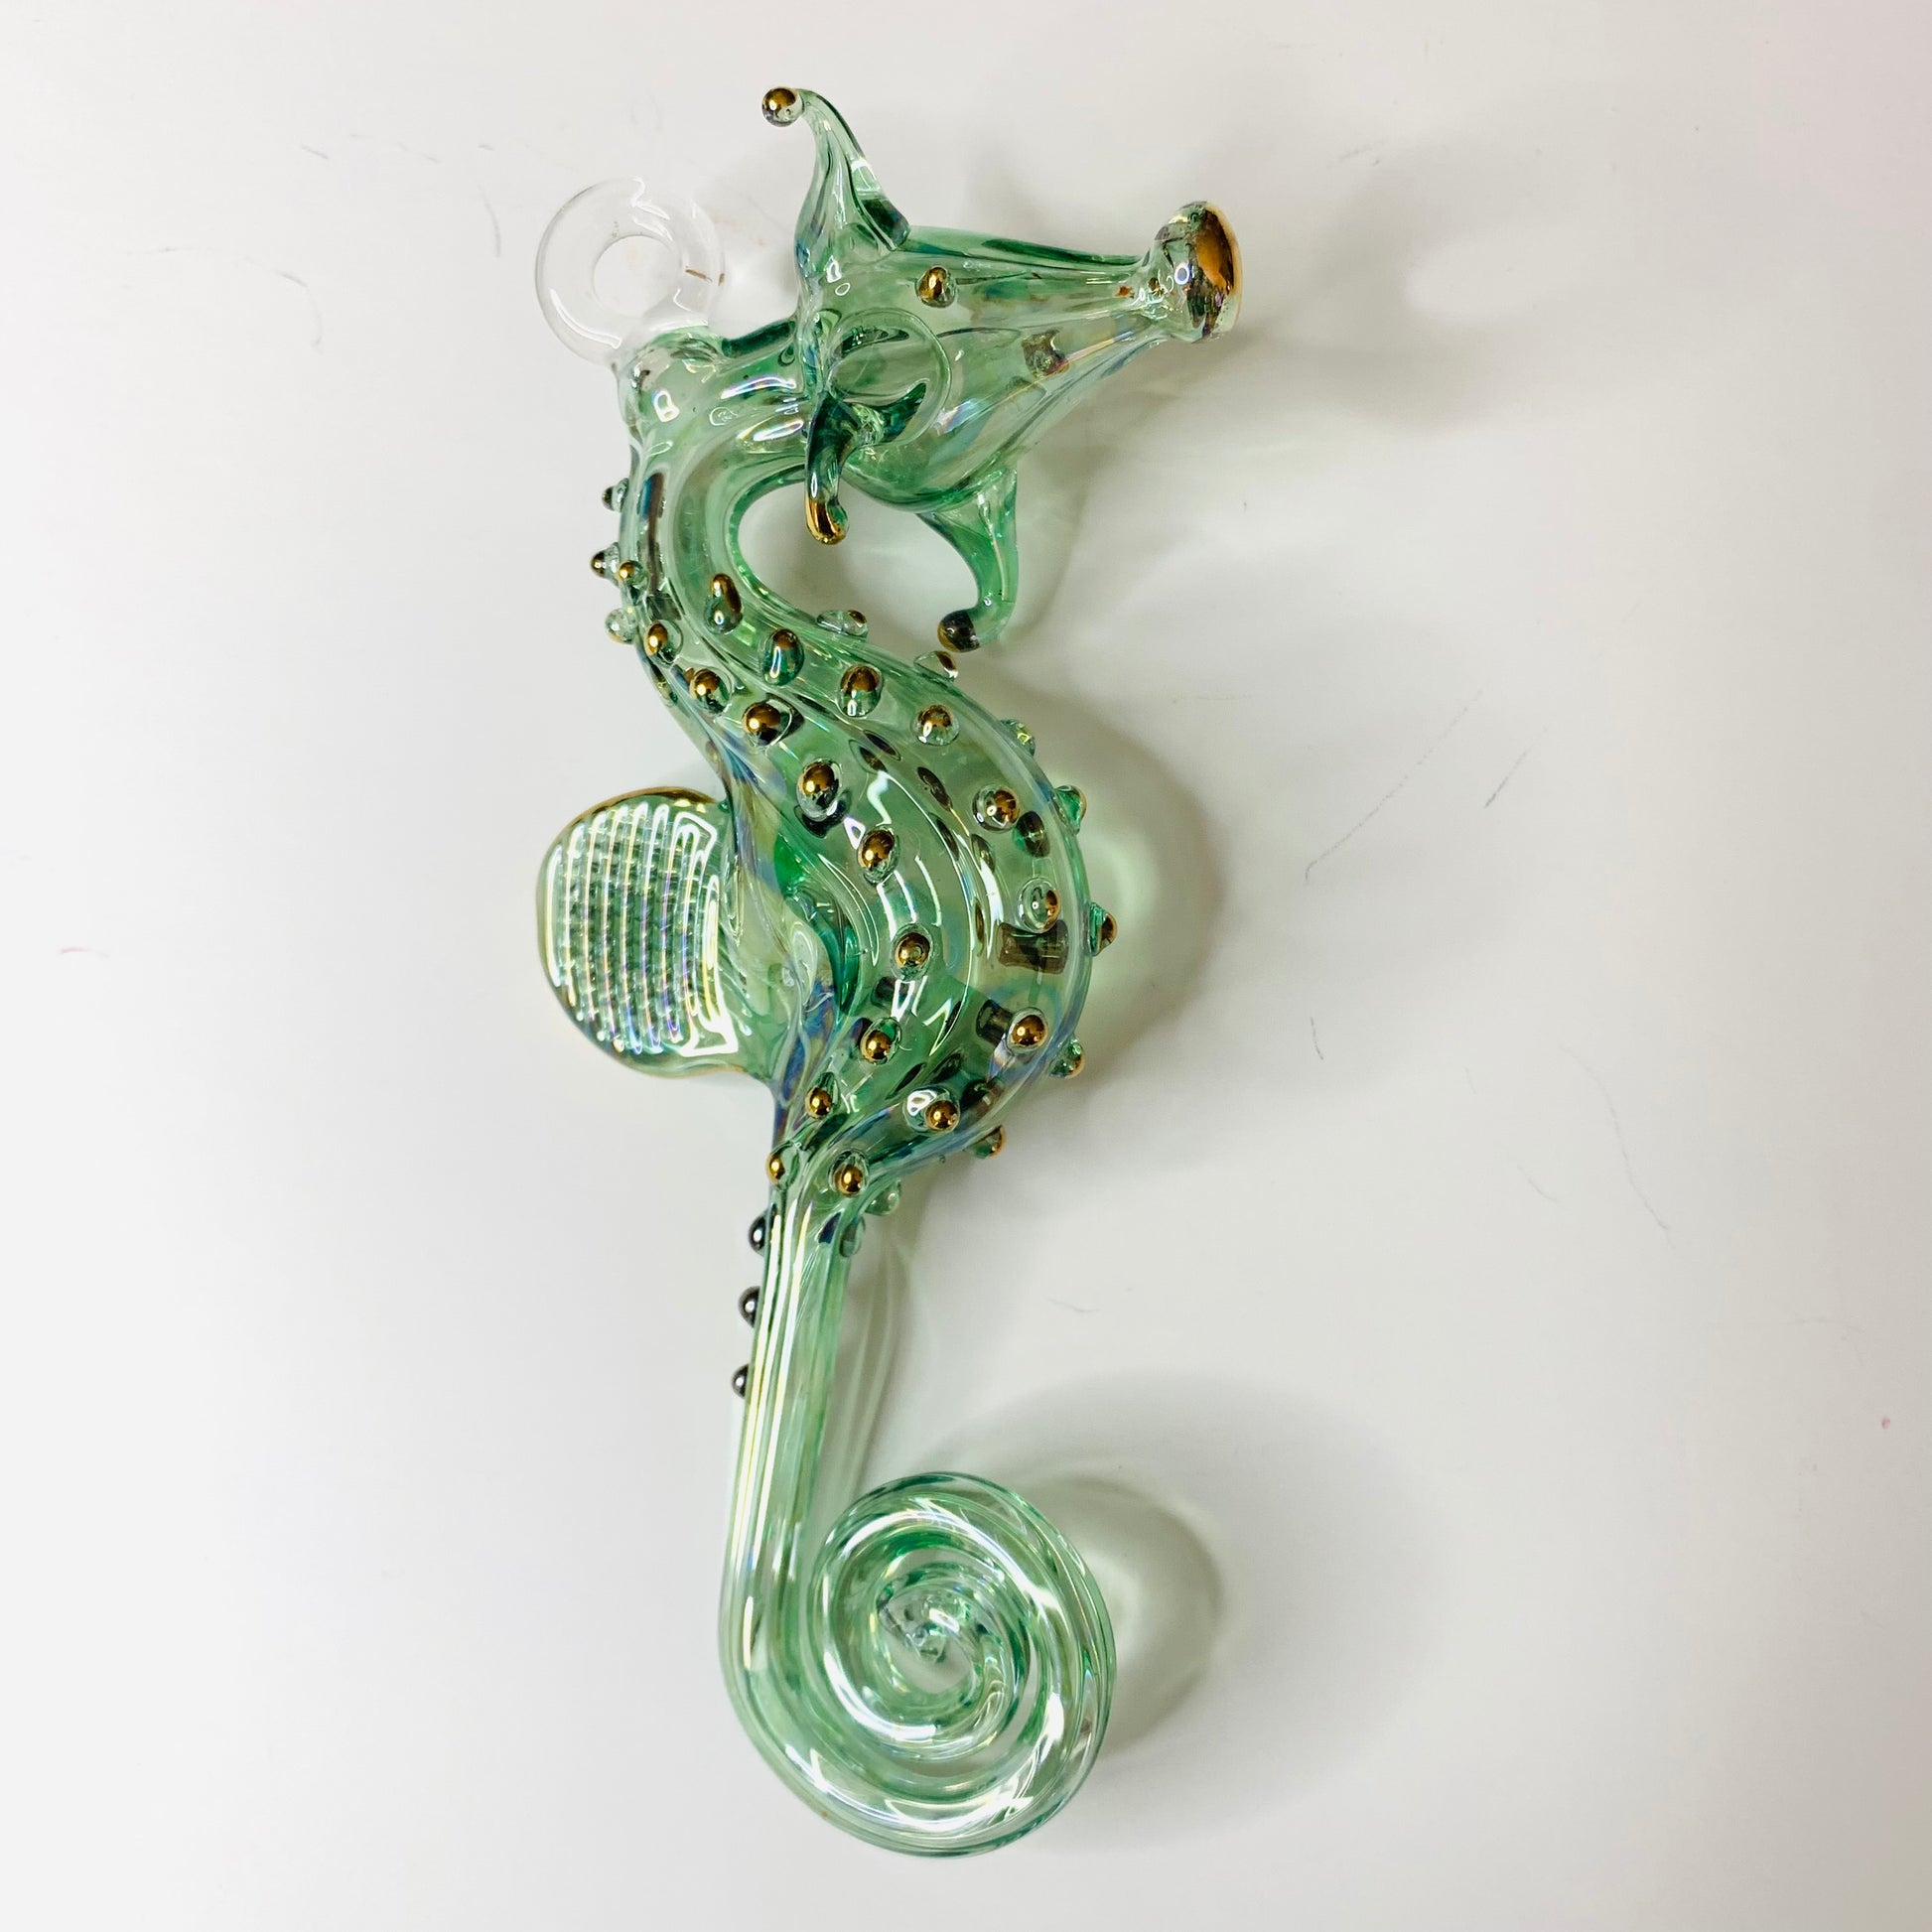 Blown Glass Ornament - Seahorse